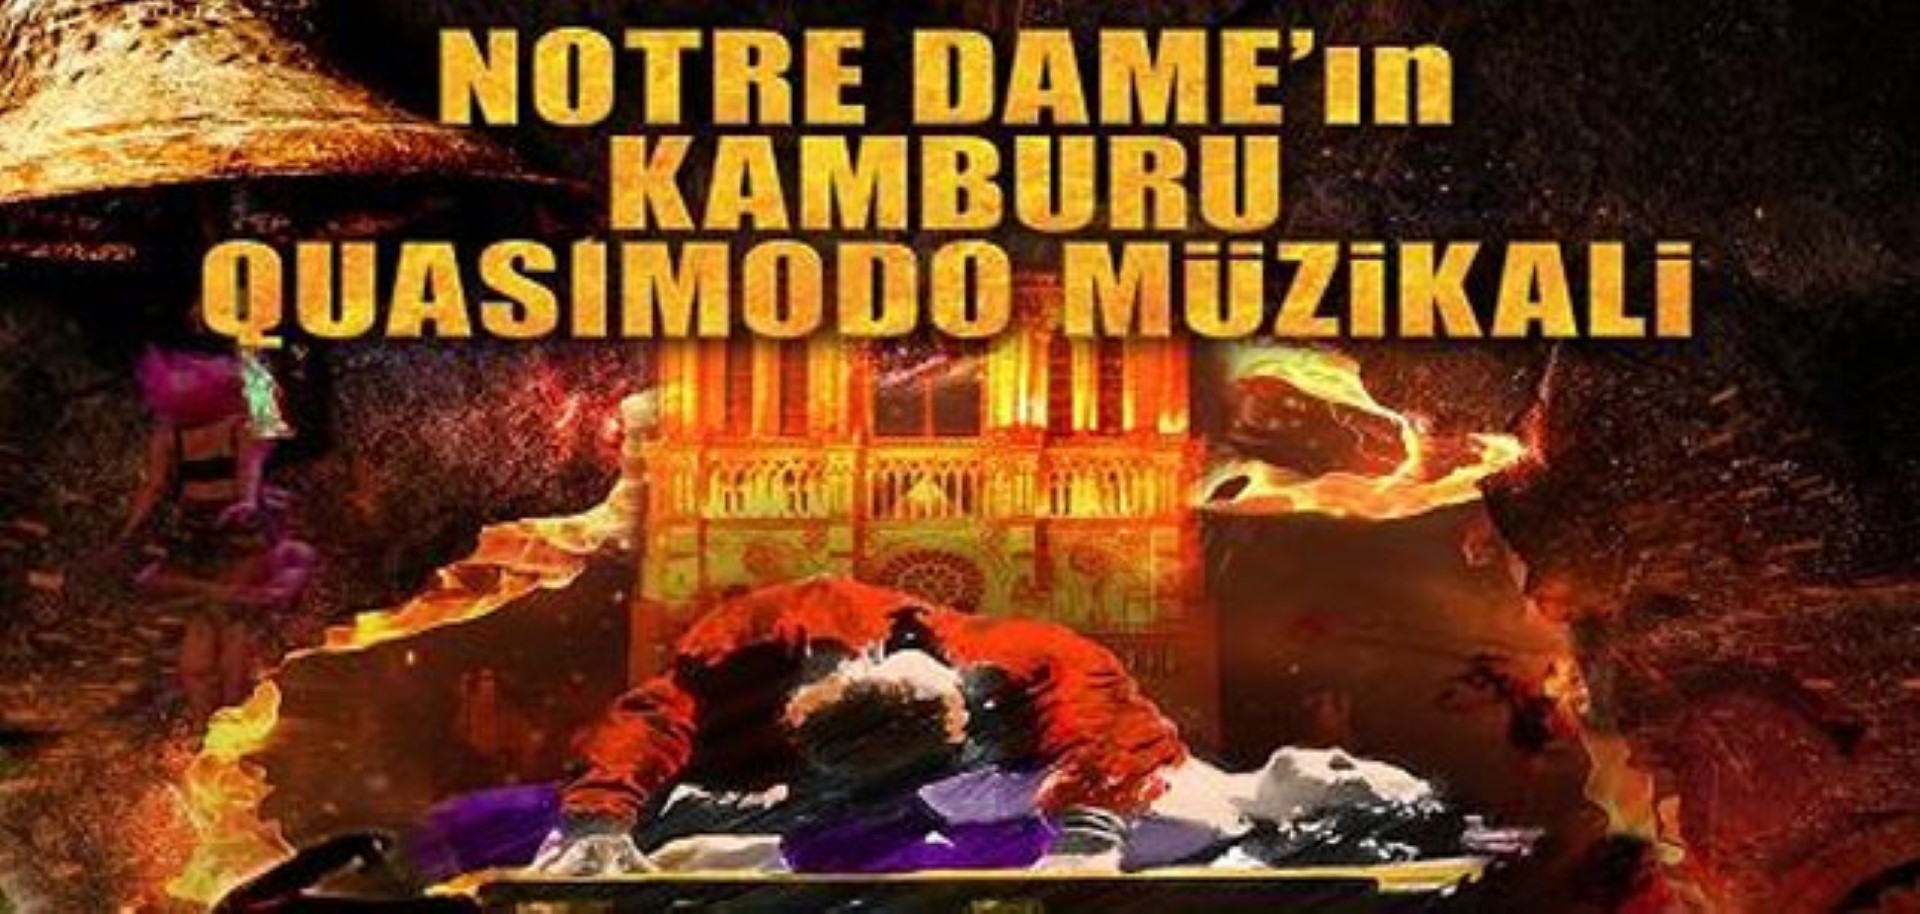 Didimde Notre Dame’in Kamburu Müzikali